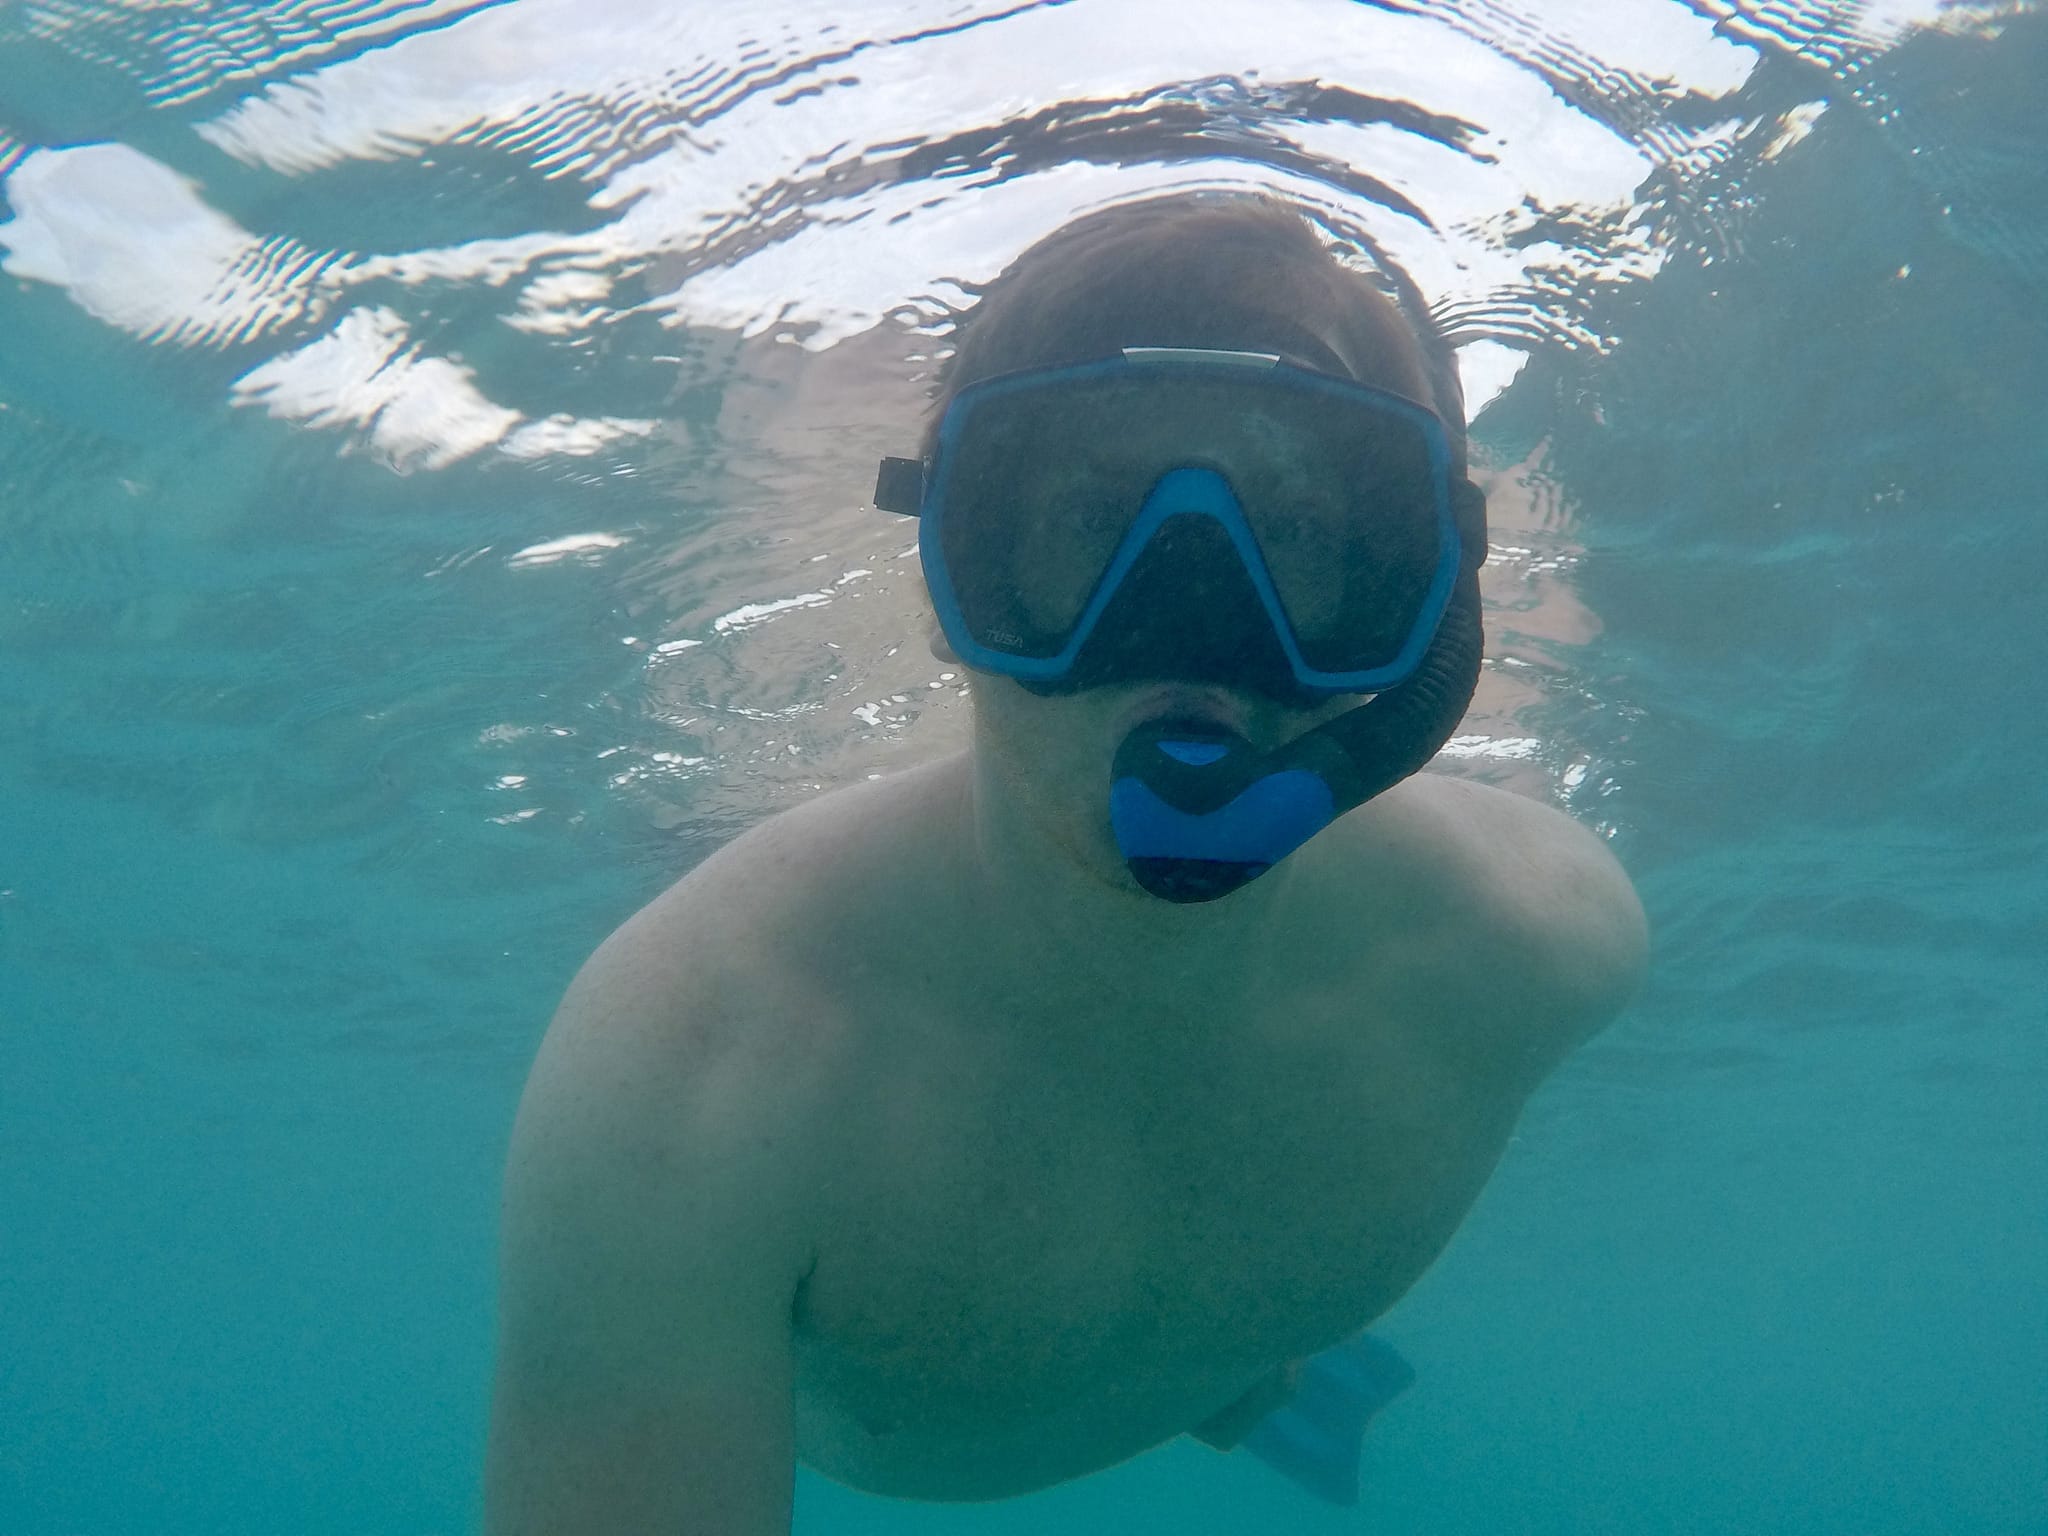 In de lagune van Coco Bodu Hithi kun je uren spetteren - soms spetteren, soms zwemmen, soms snorkelen. Reisverslag Coco Bodu Hithi Maldiven ervaringen